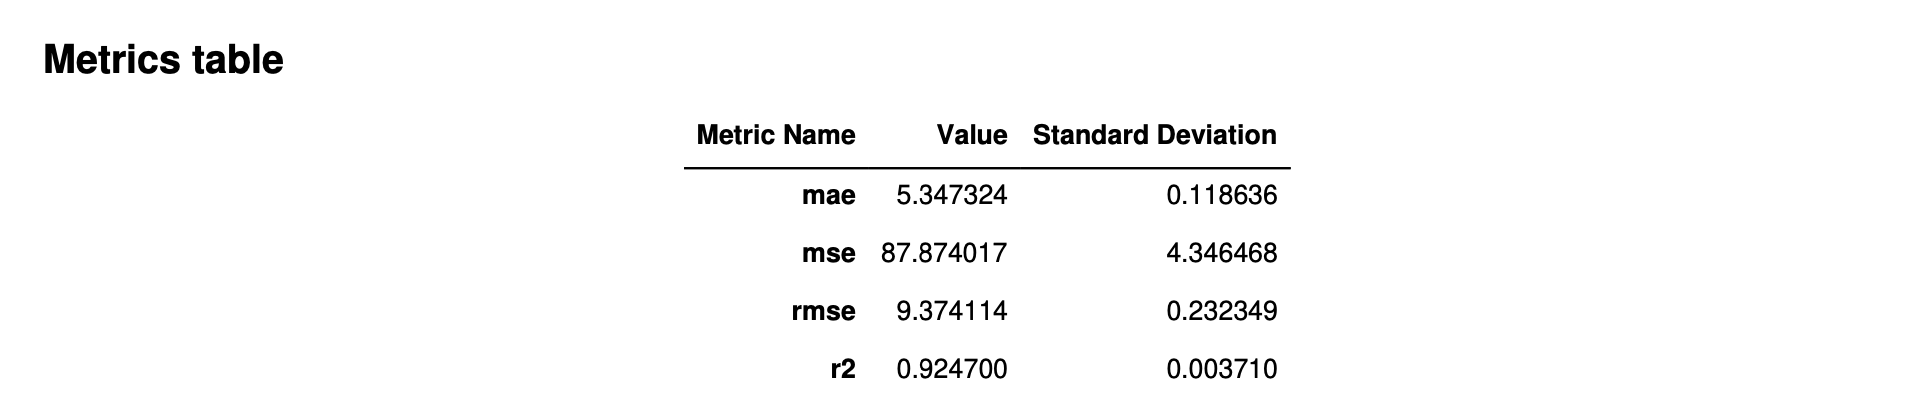 Amazon SageMaker Autopilot model insights regression metrics report example.